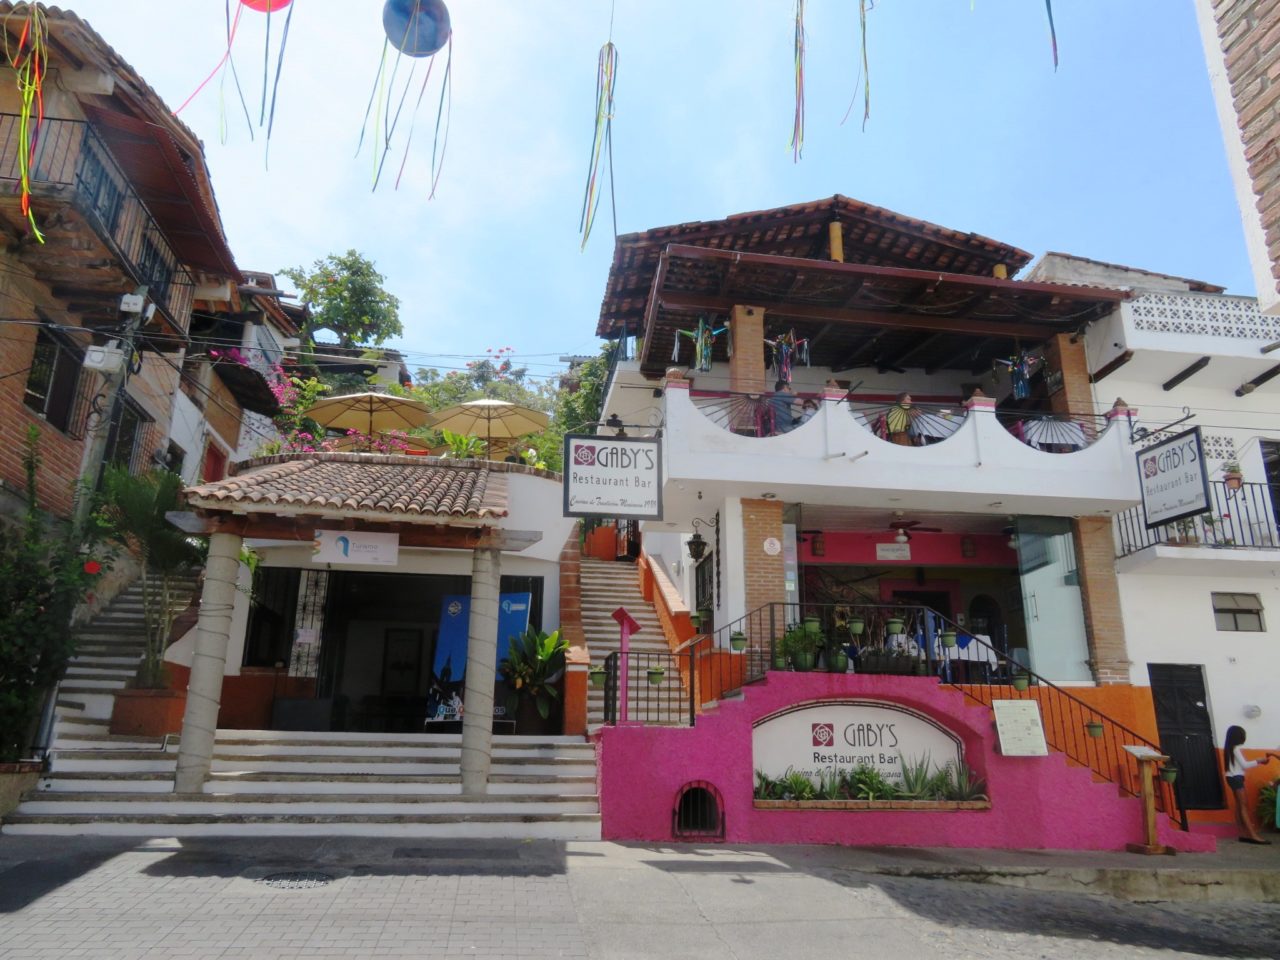 Puerto Vallarta Favorite Experiences : Gaby's Restaurant and Bar